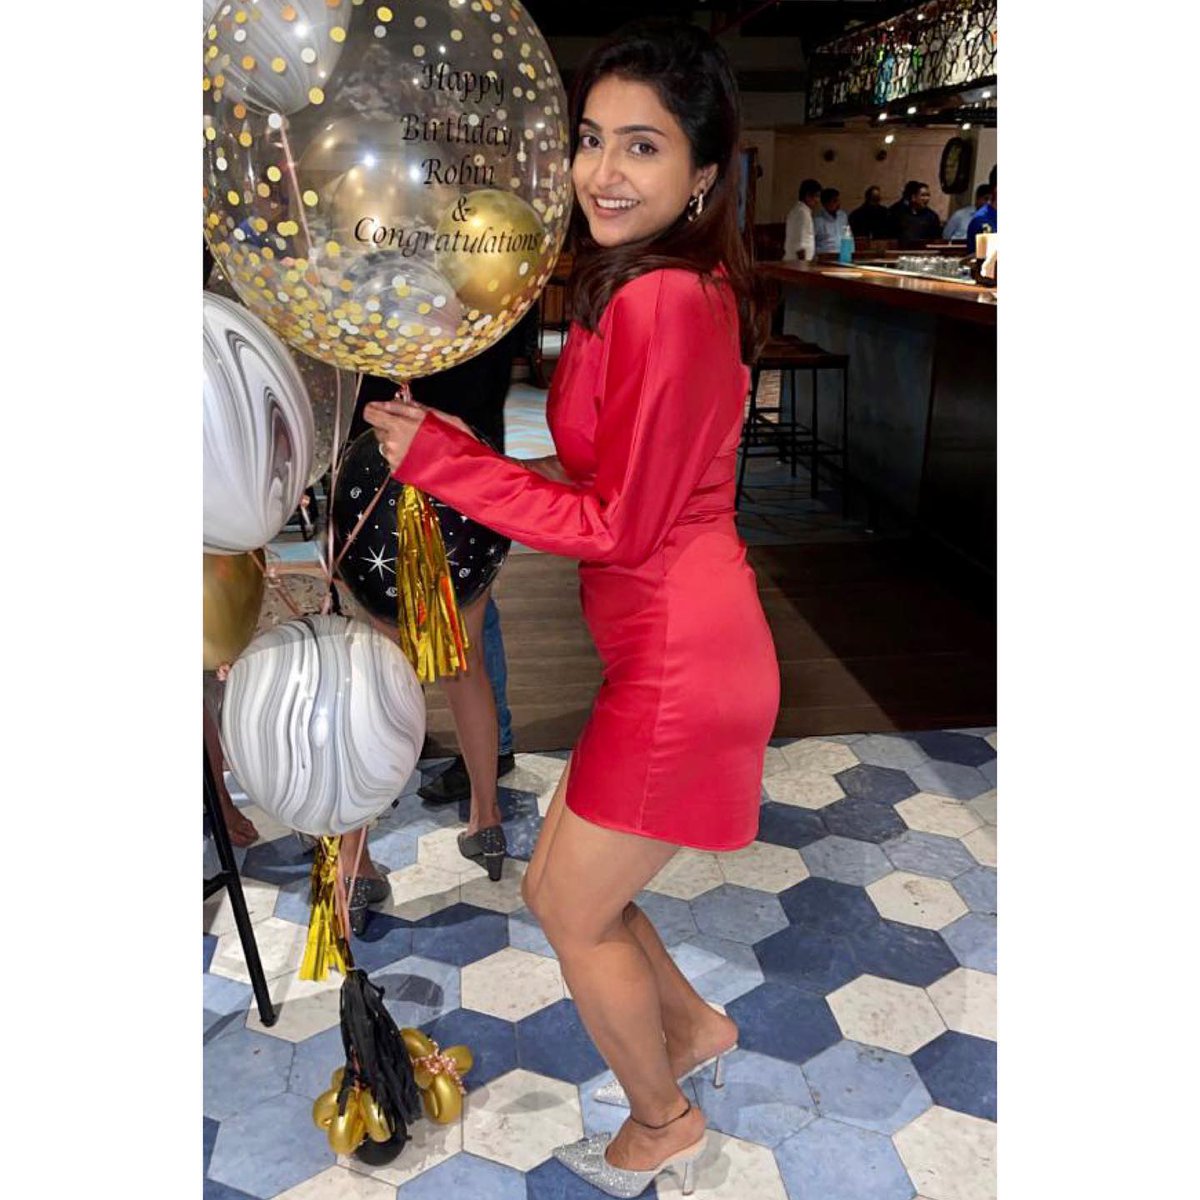 The Indian actress Avantika Misura🇮🇳🎈#avantikamishra #indianactress #indiangirl #naturalgirl #reddress #shoeslover #balloondecor #balloons